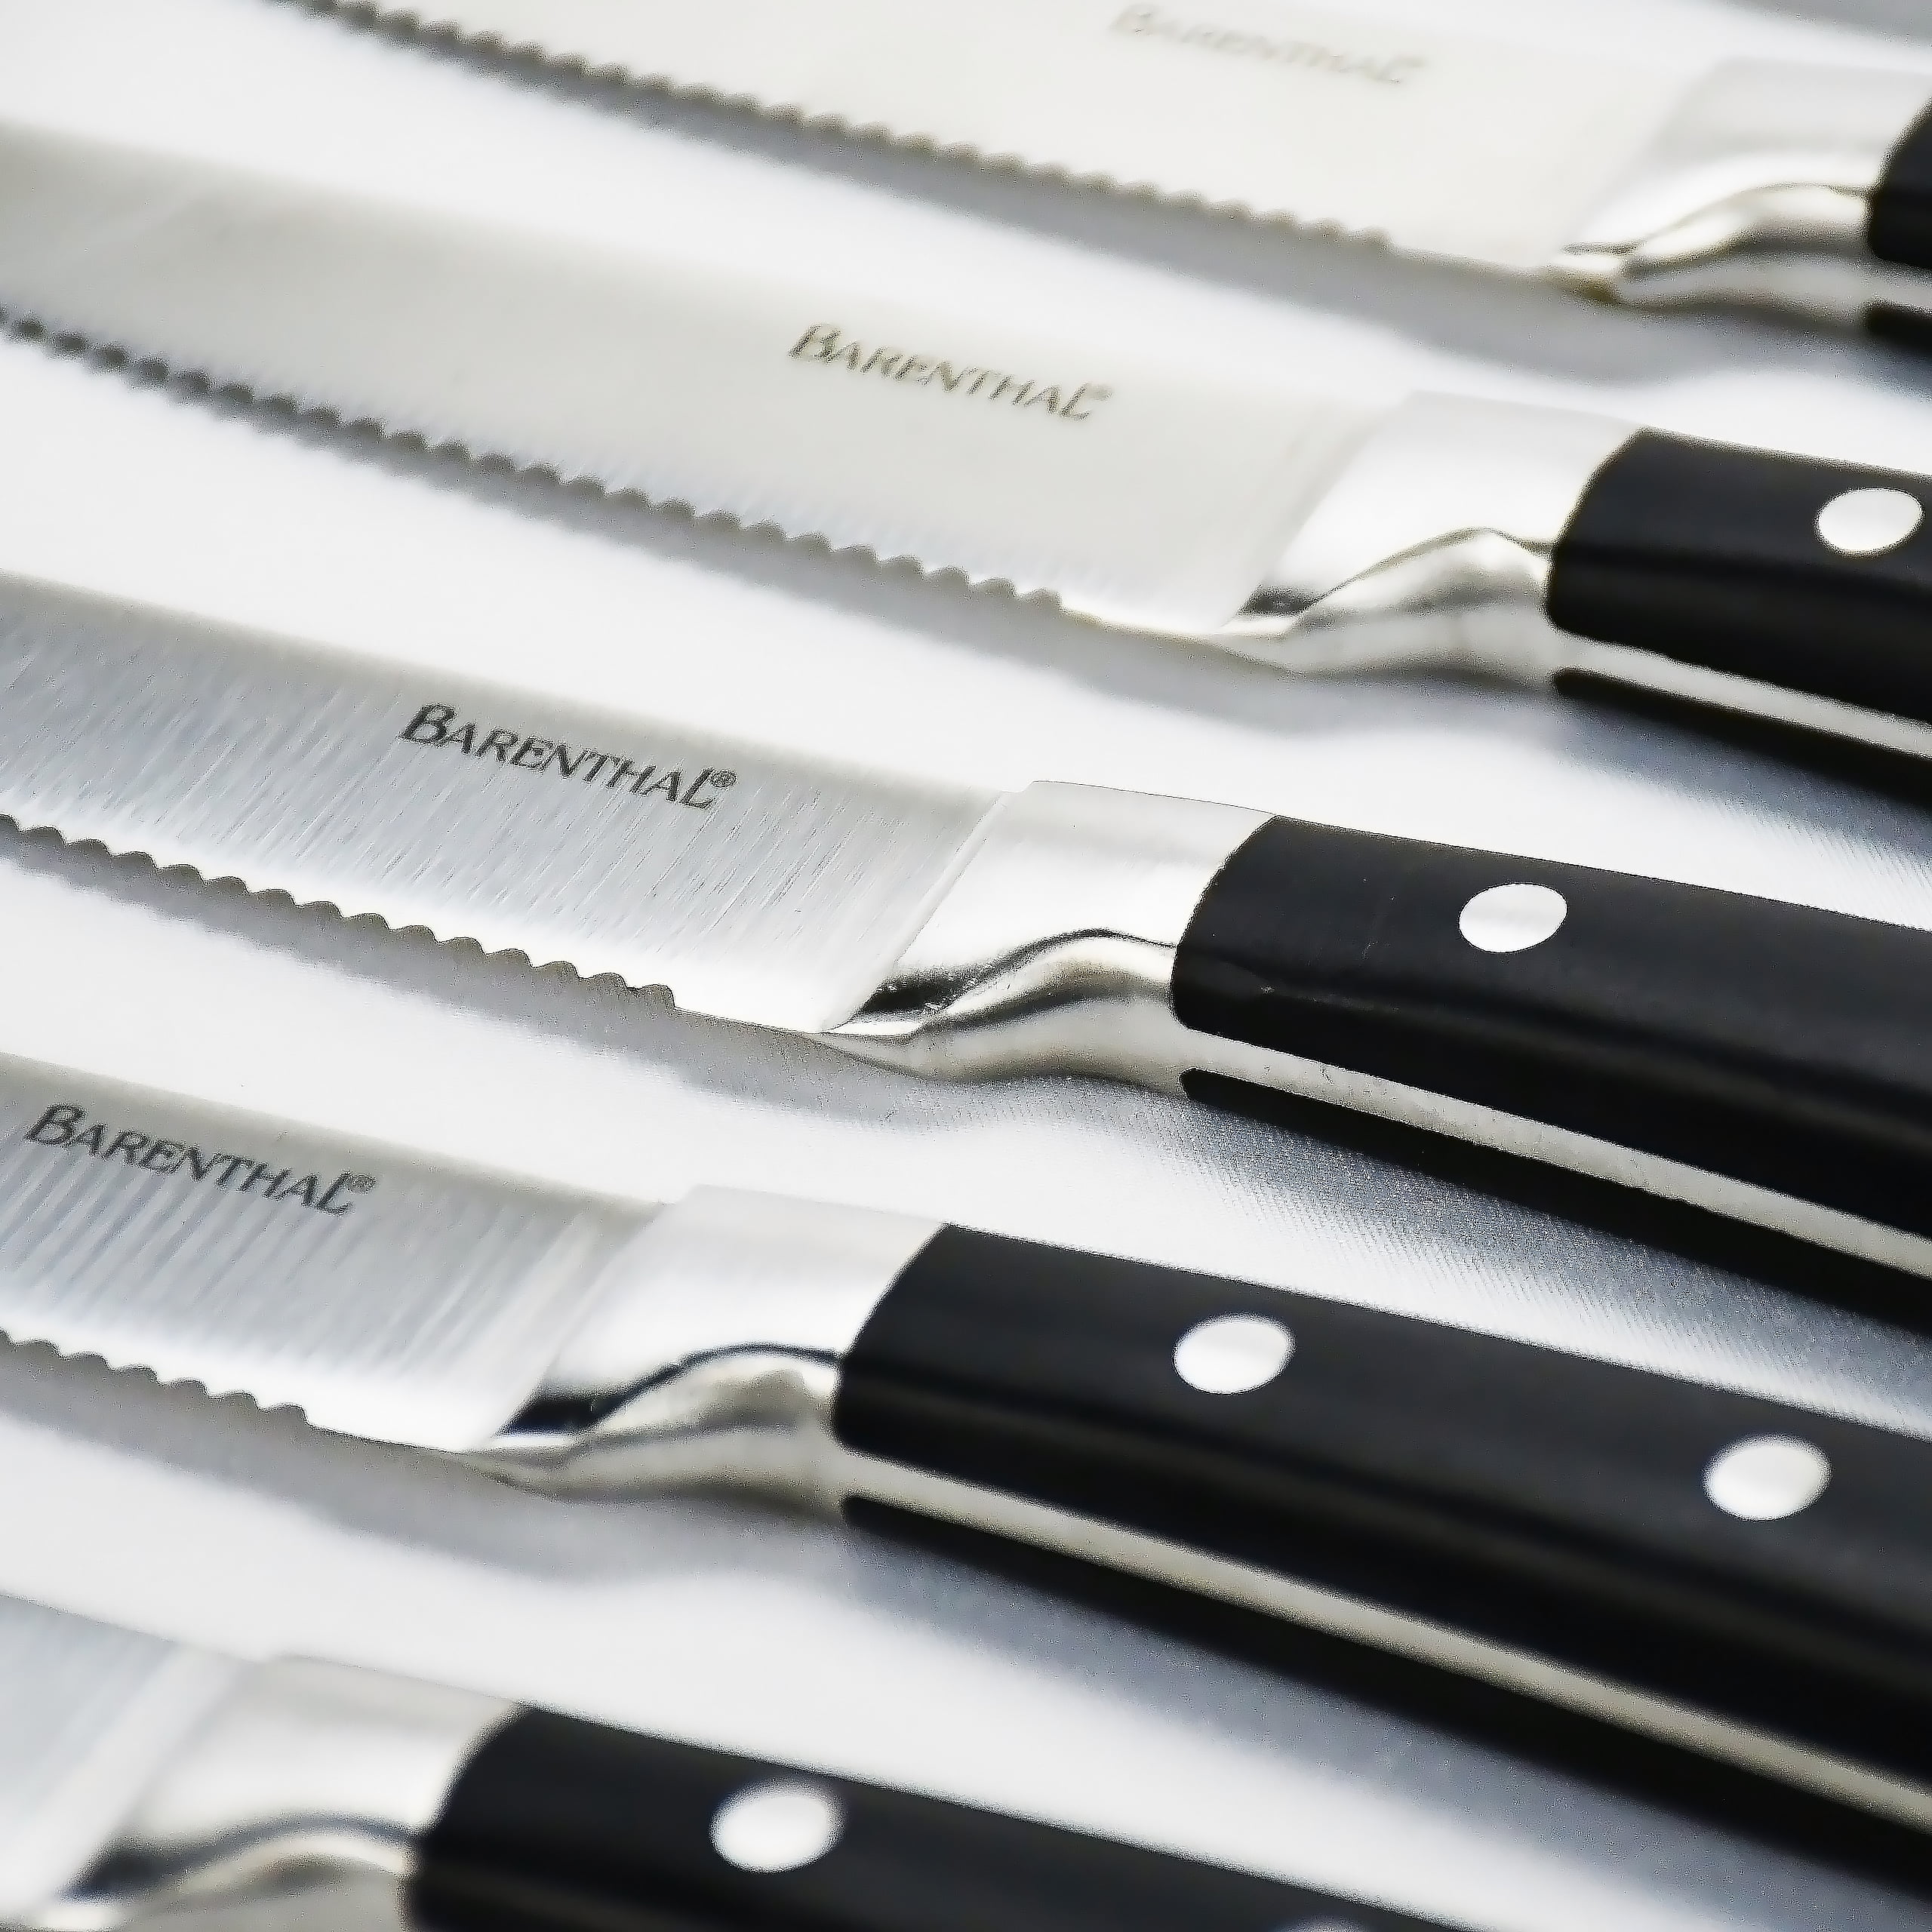 BEZIA Steak Knives, Non-Serrated Steak Knives Set of 6, 5 Inch German  Stainless Steel Steak Knife, 6 Pieces Razor Sharp Straight Edge Steak knife  with